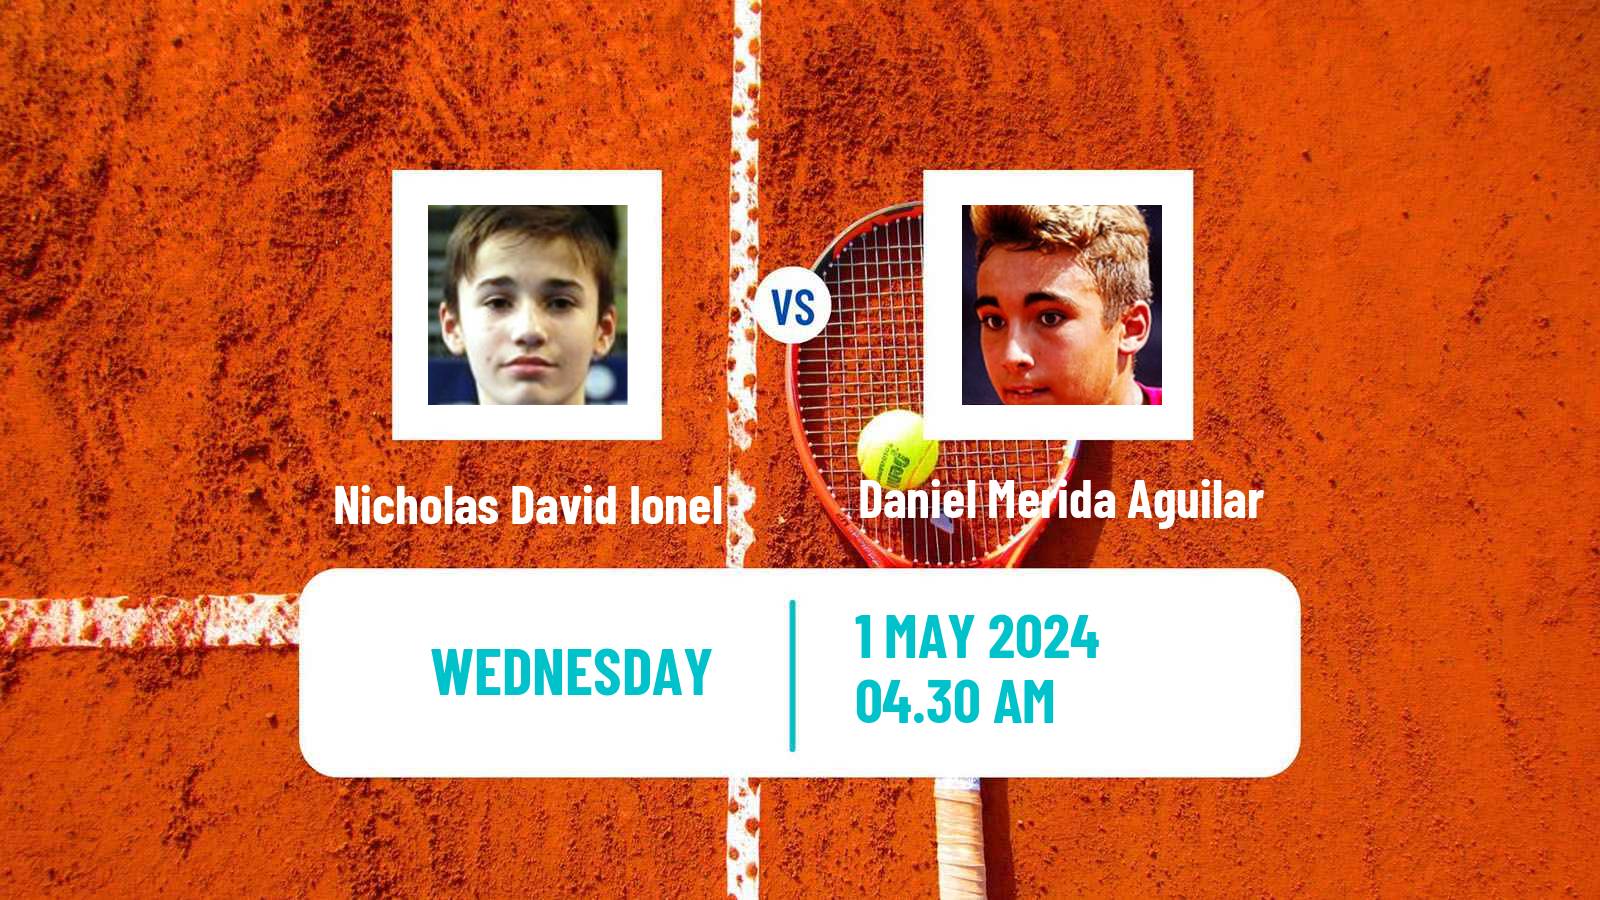 Tennis ITF M25 Sabadell Men Nicholas David Ionel - Daniel Merida Aguilar